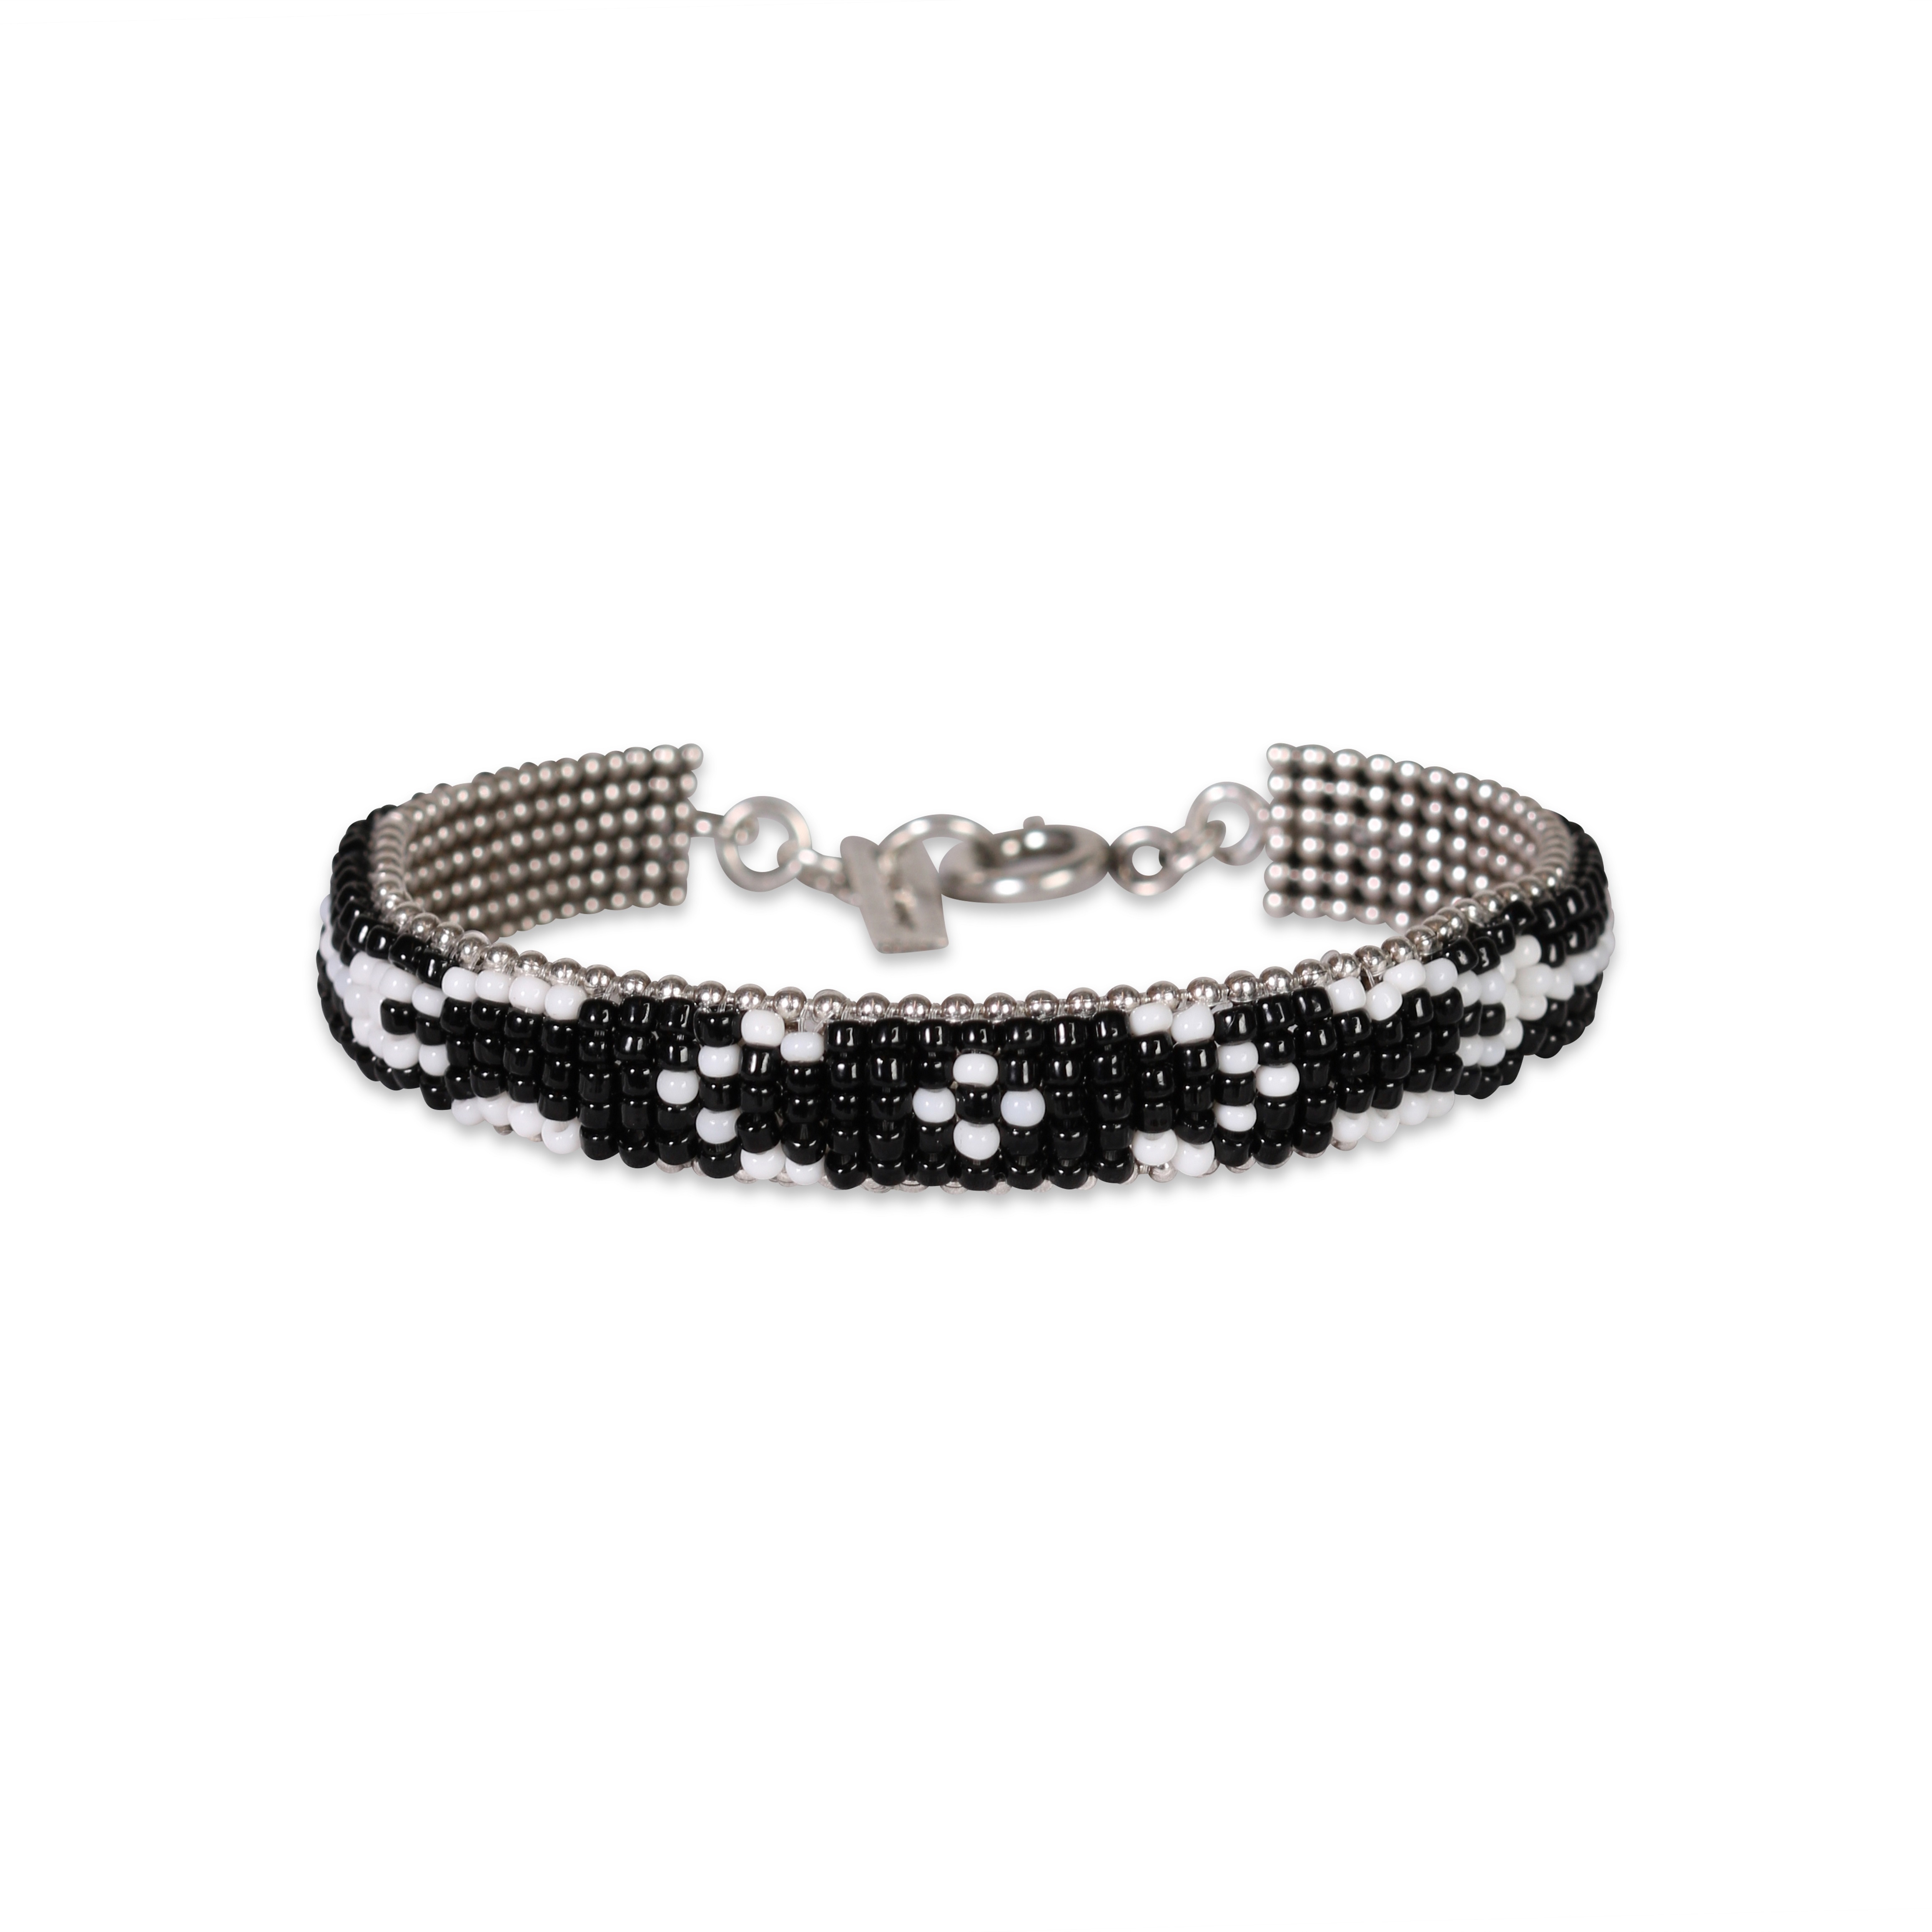 Isabel Marant Pearl Bracelet in Black